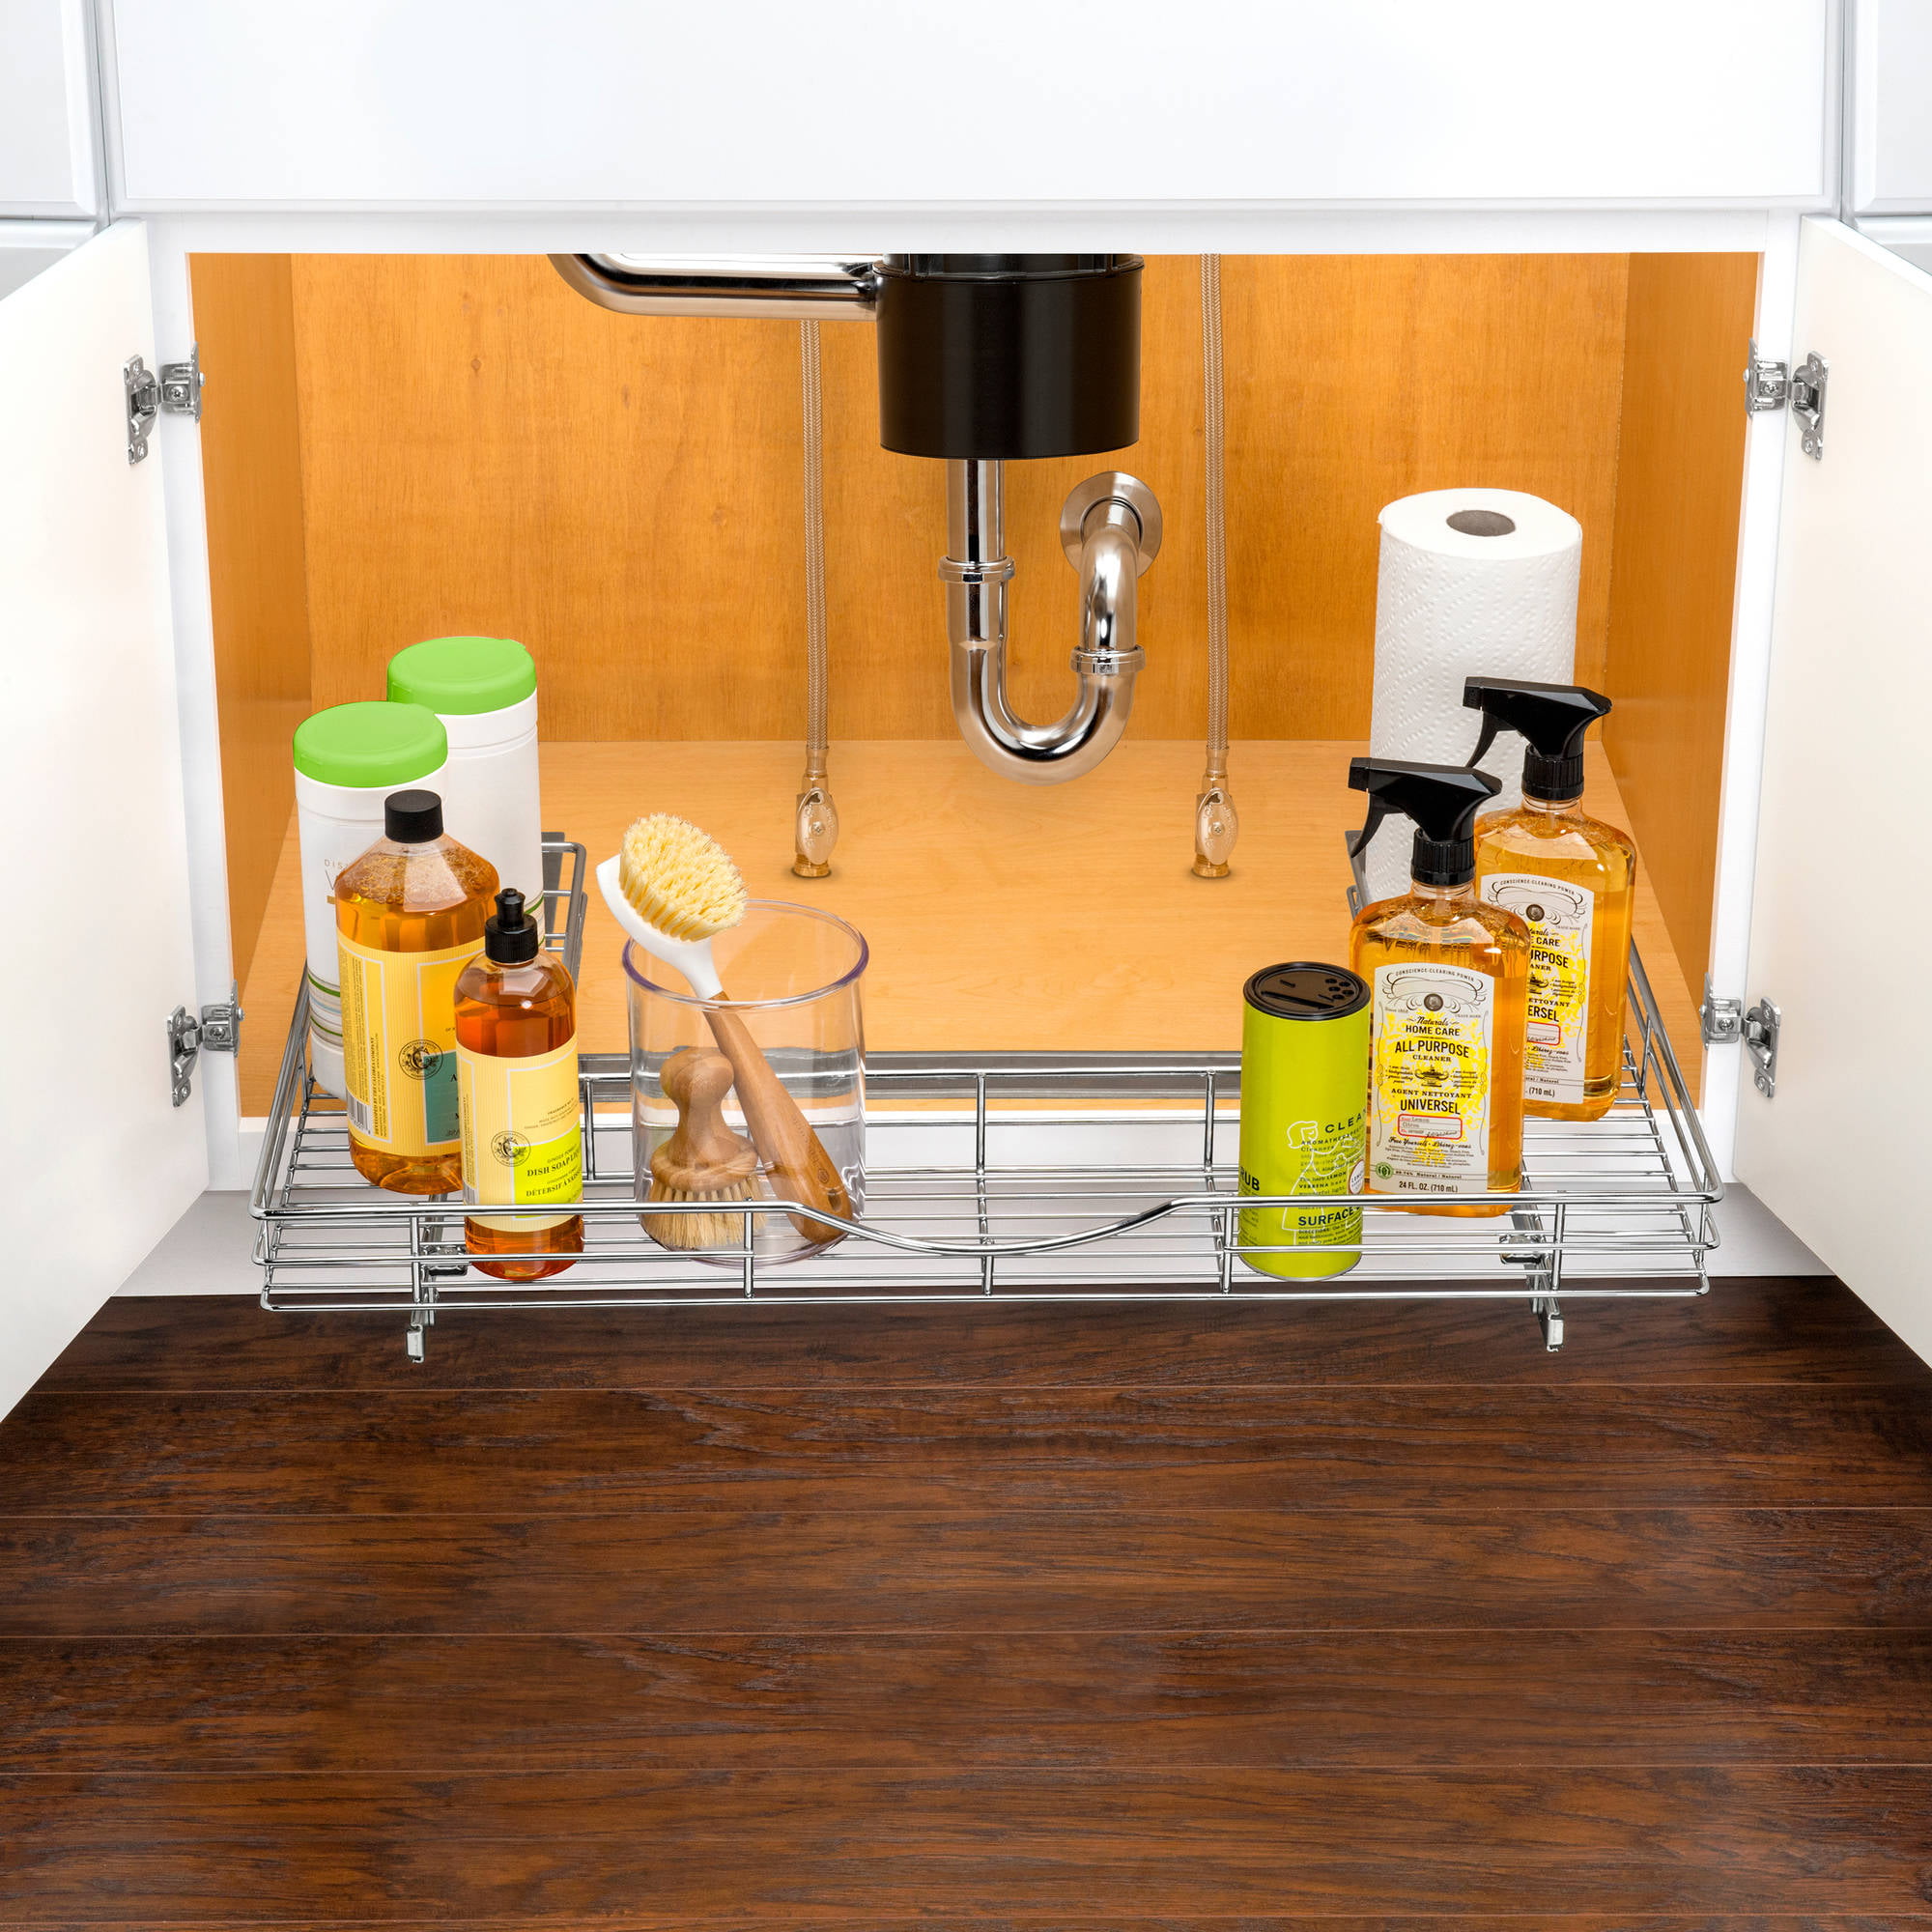  LYNK PROFESSIONAL® Slide Out Under Sink Cabinet Organizer -  11.5 in. wide x 18 inch deep - Sliding Pull Out Shelf for Inside Kitchen  Cabinet or Under Sink - Lifetime Limited